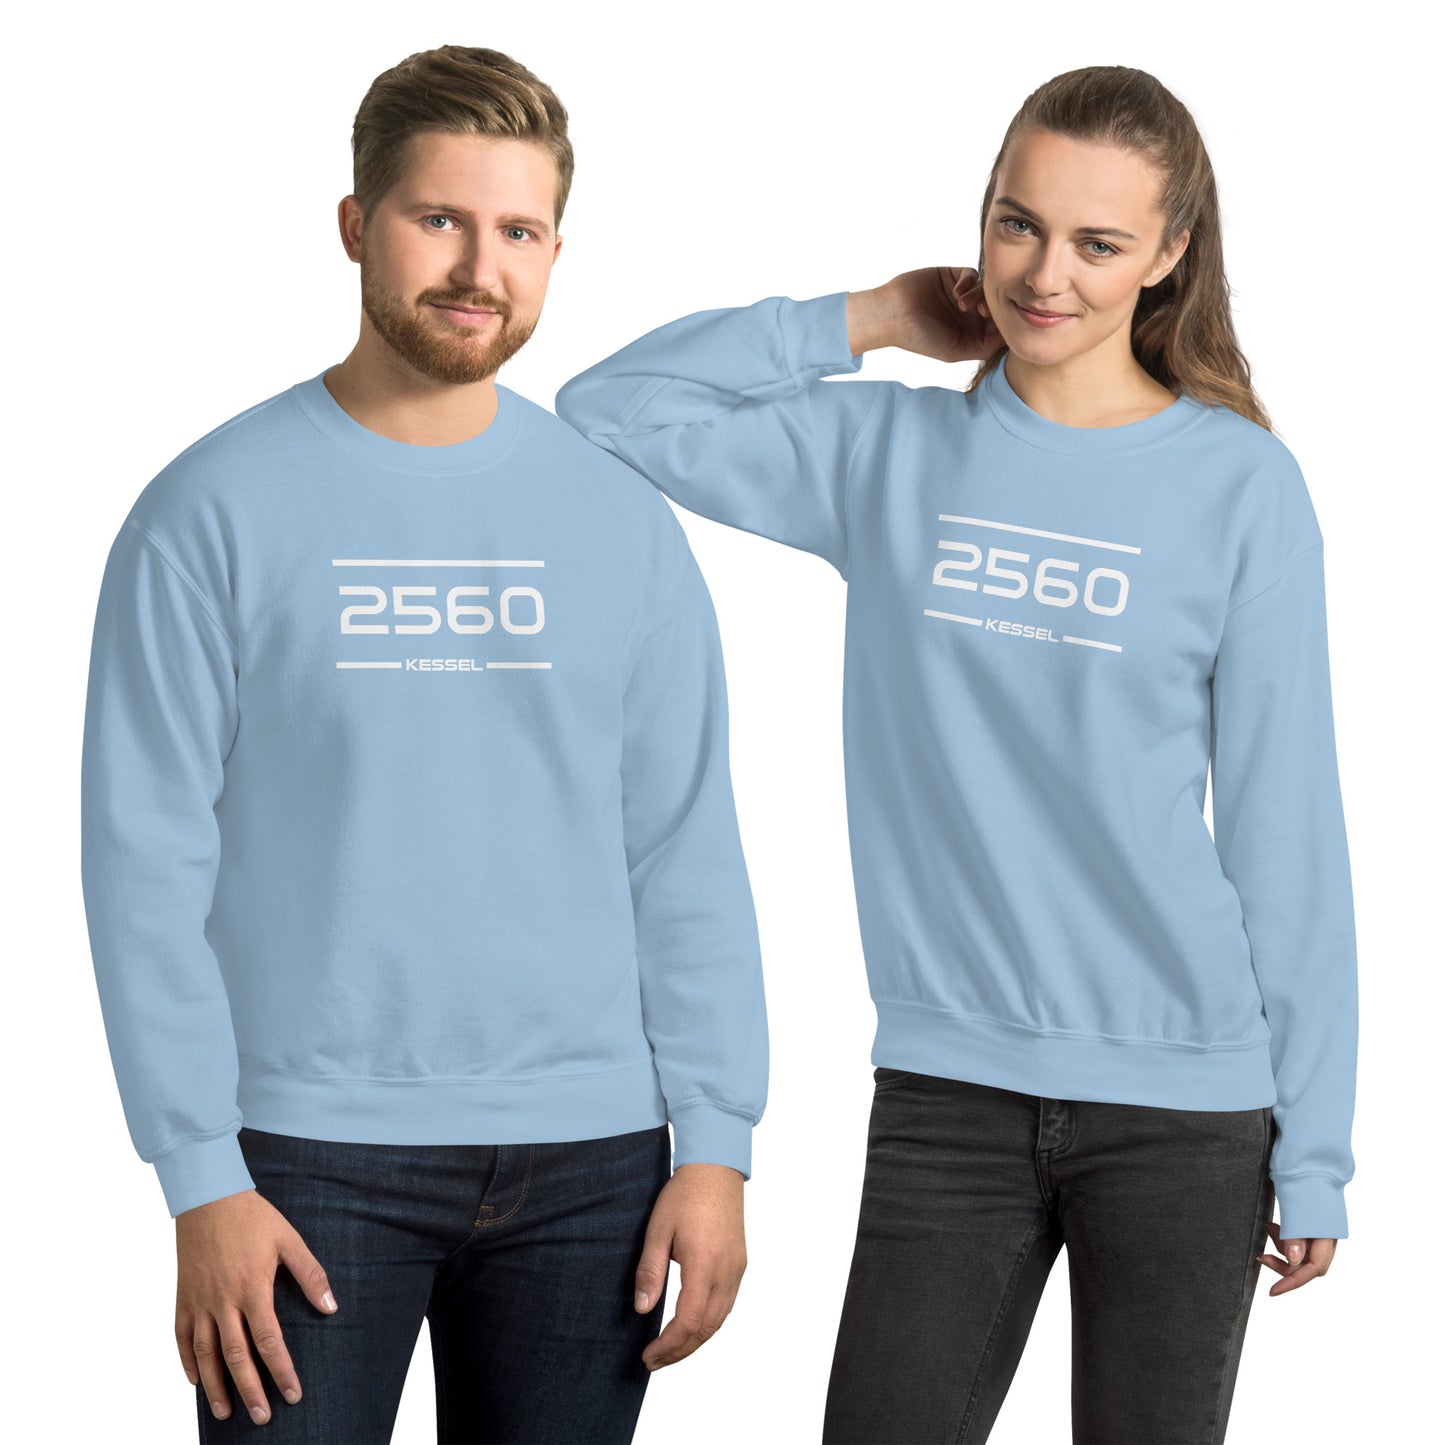 Sweater - 2560 - Kessel (M/V)